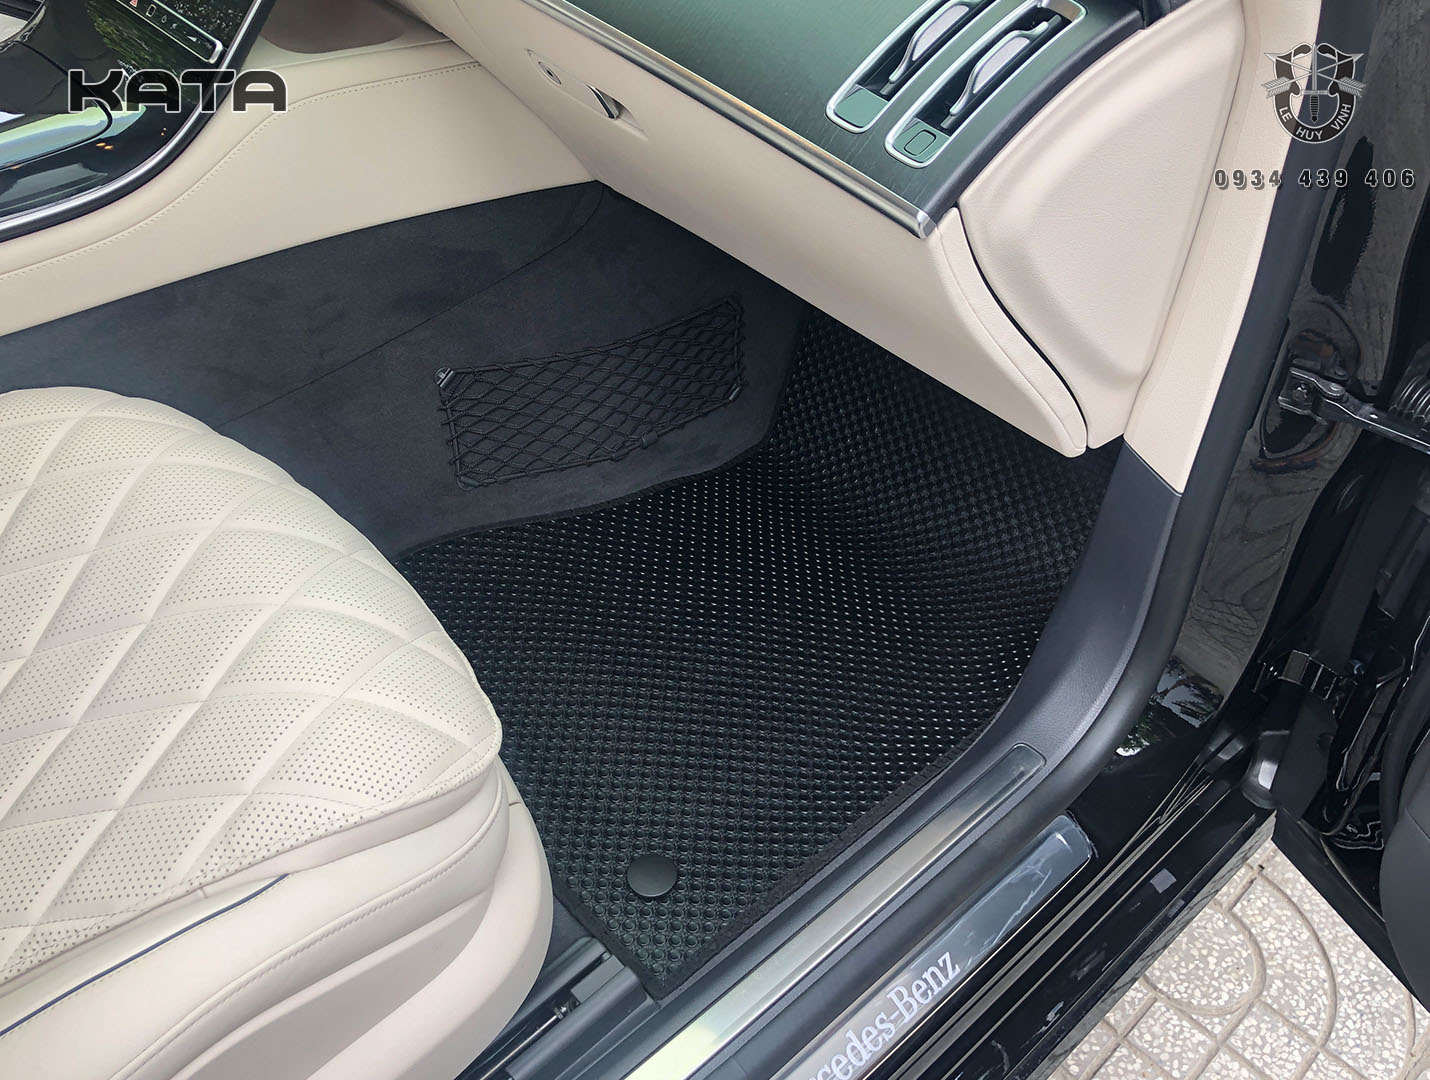 Thảm lót sàn Mercedes S450 Luxury 2022